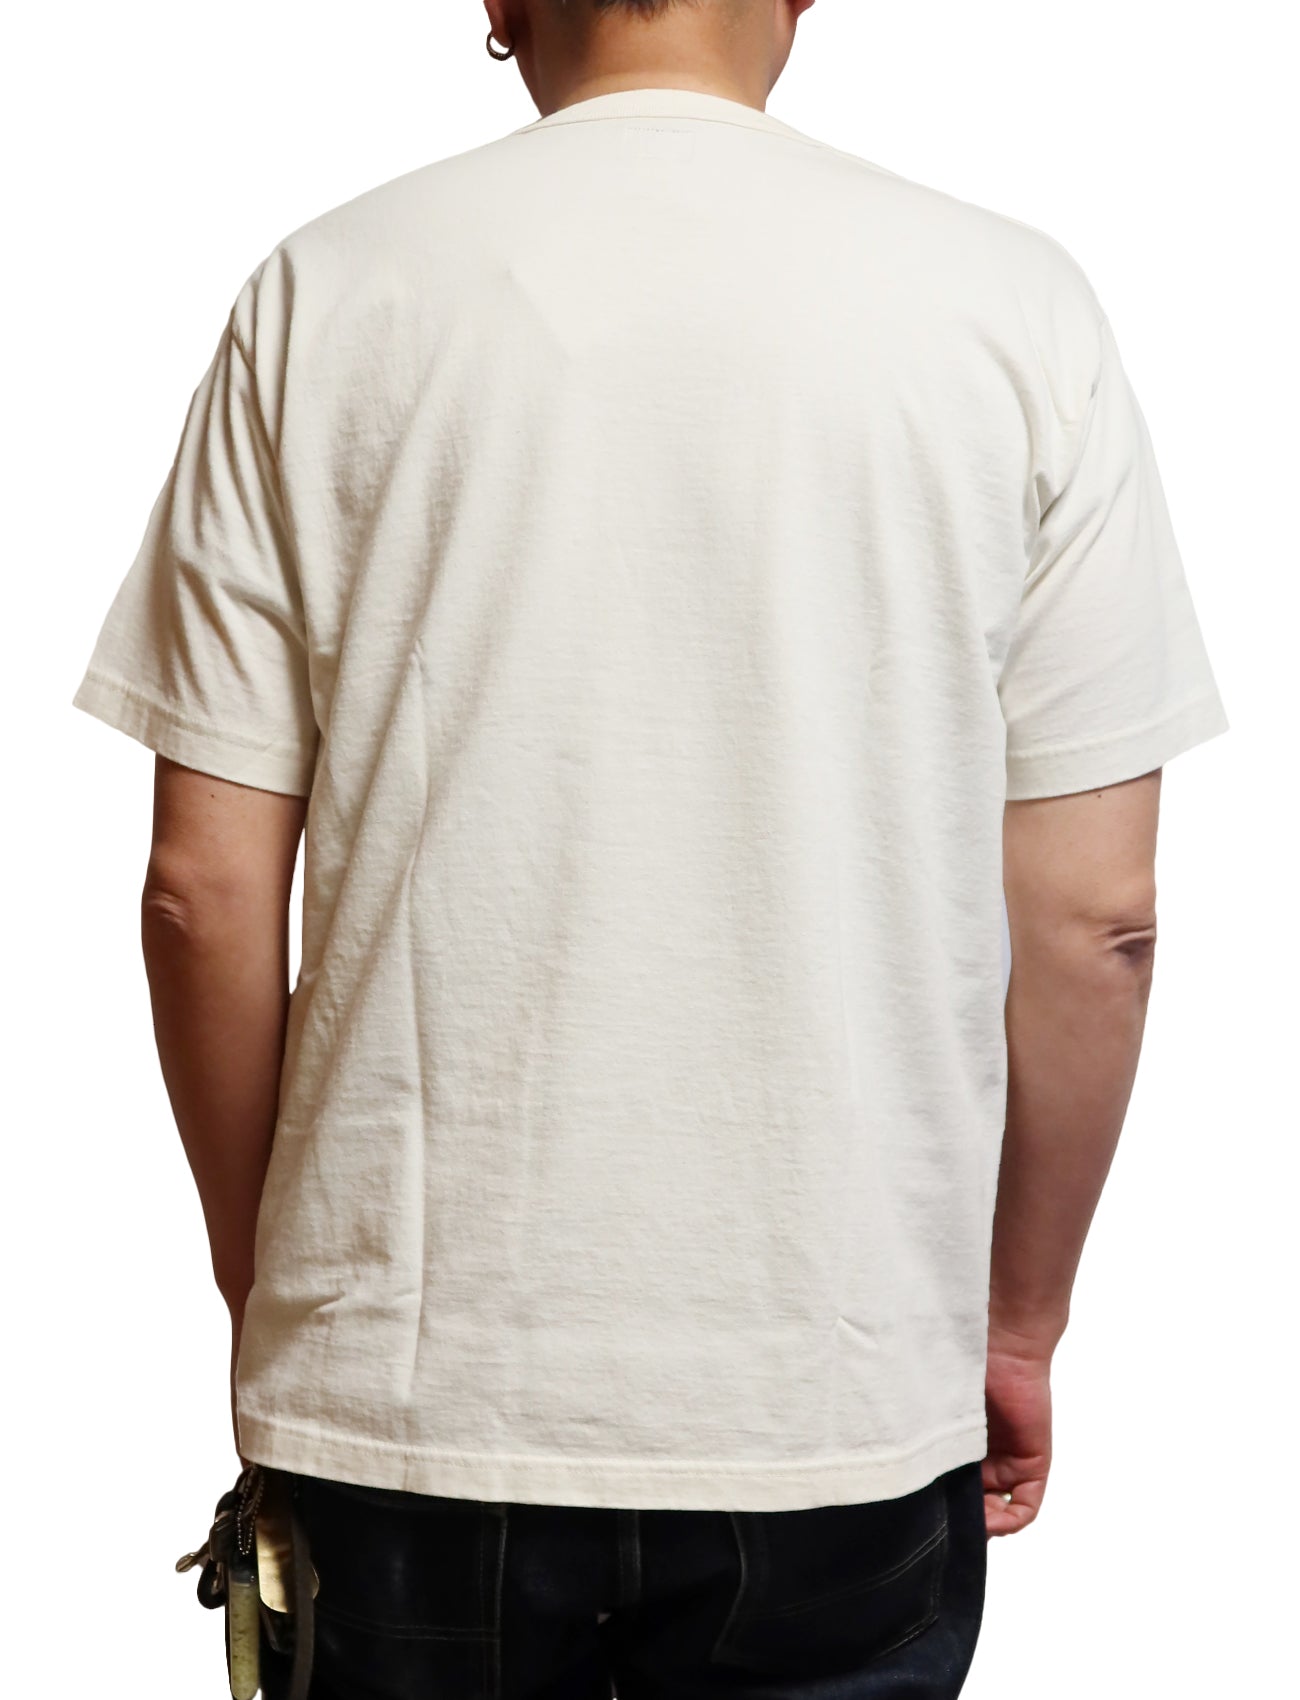 GUNZ ガンズ Tシャツ 半袖 MAISEL'S メンズ 444G085 オフホワイト 日本製